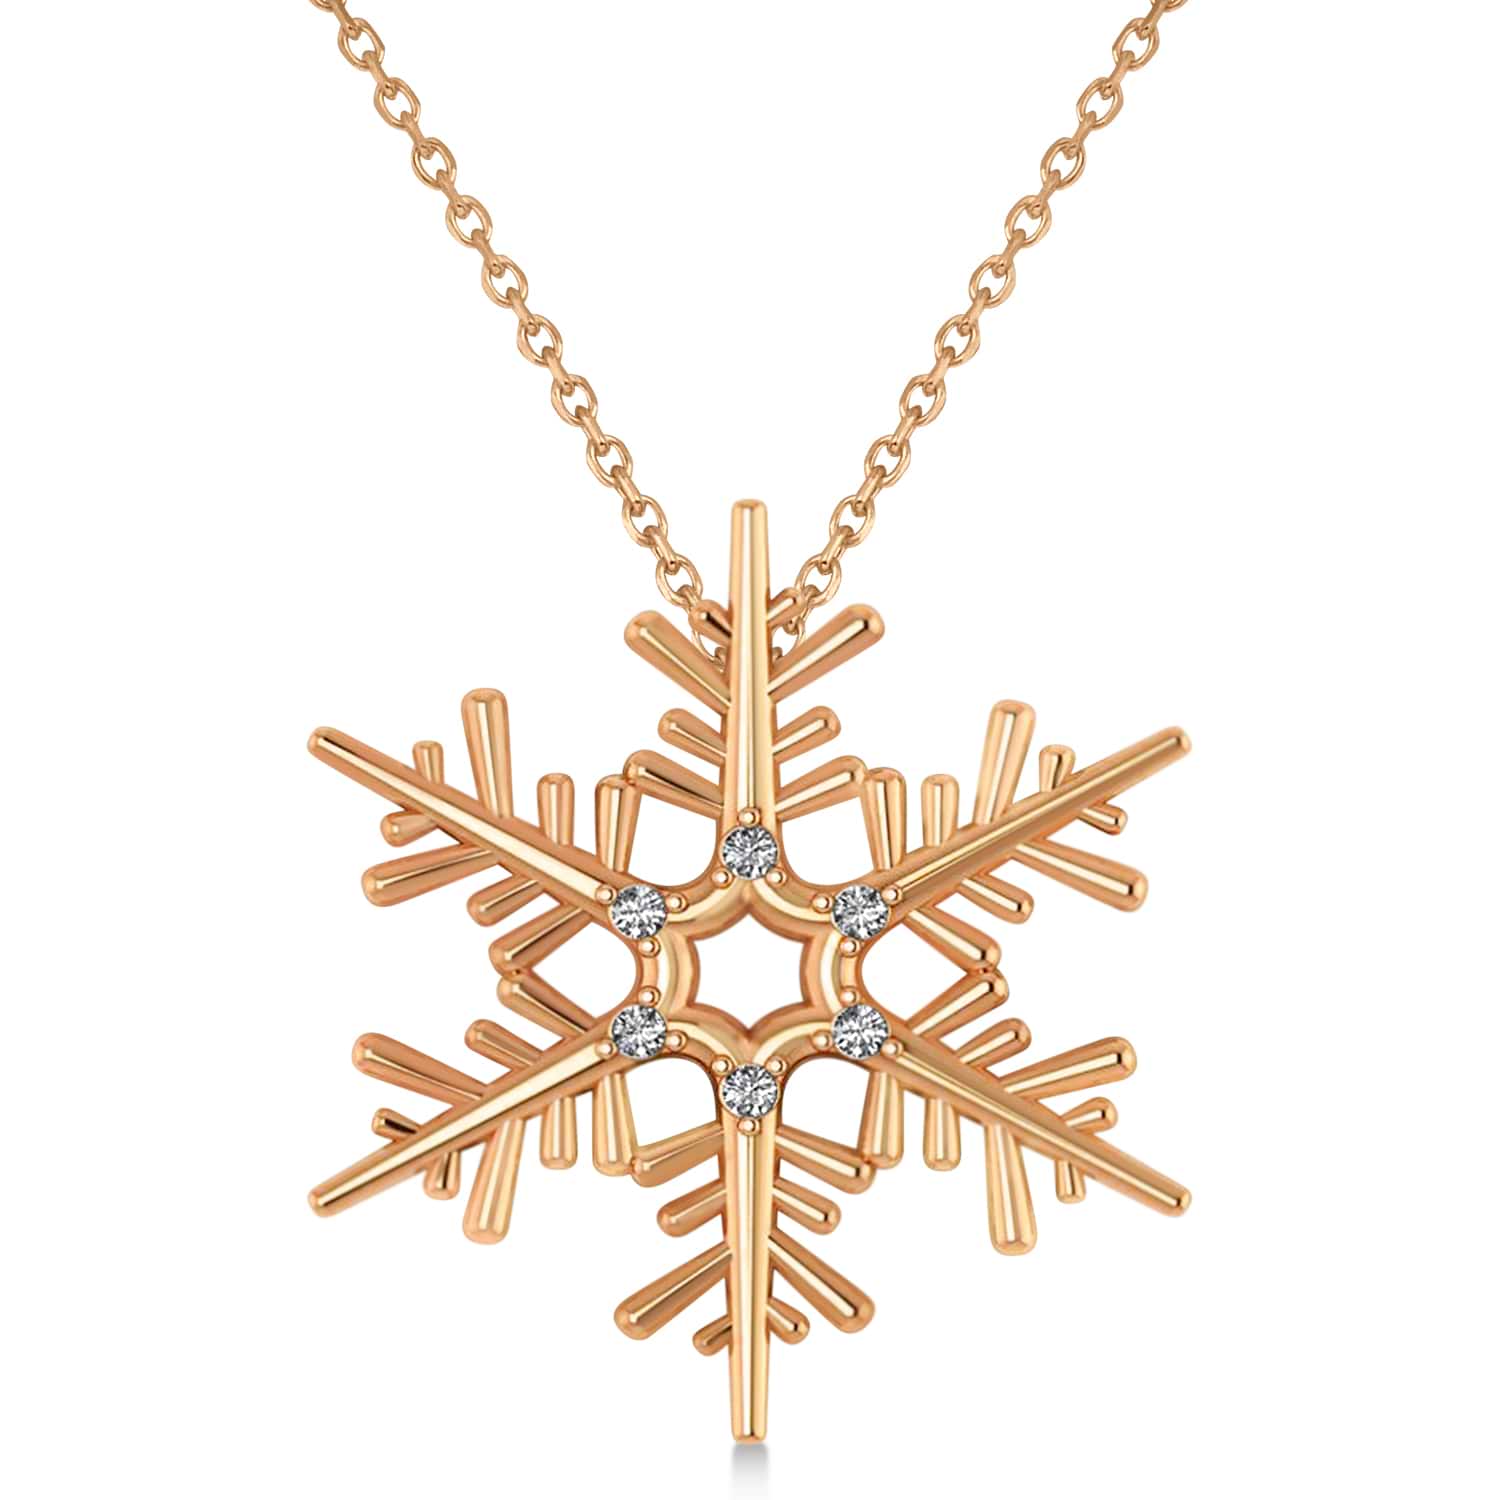 Beverley K 18K White Gold & Diamond Snowflake Necklace